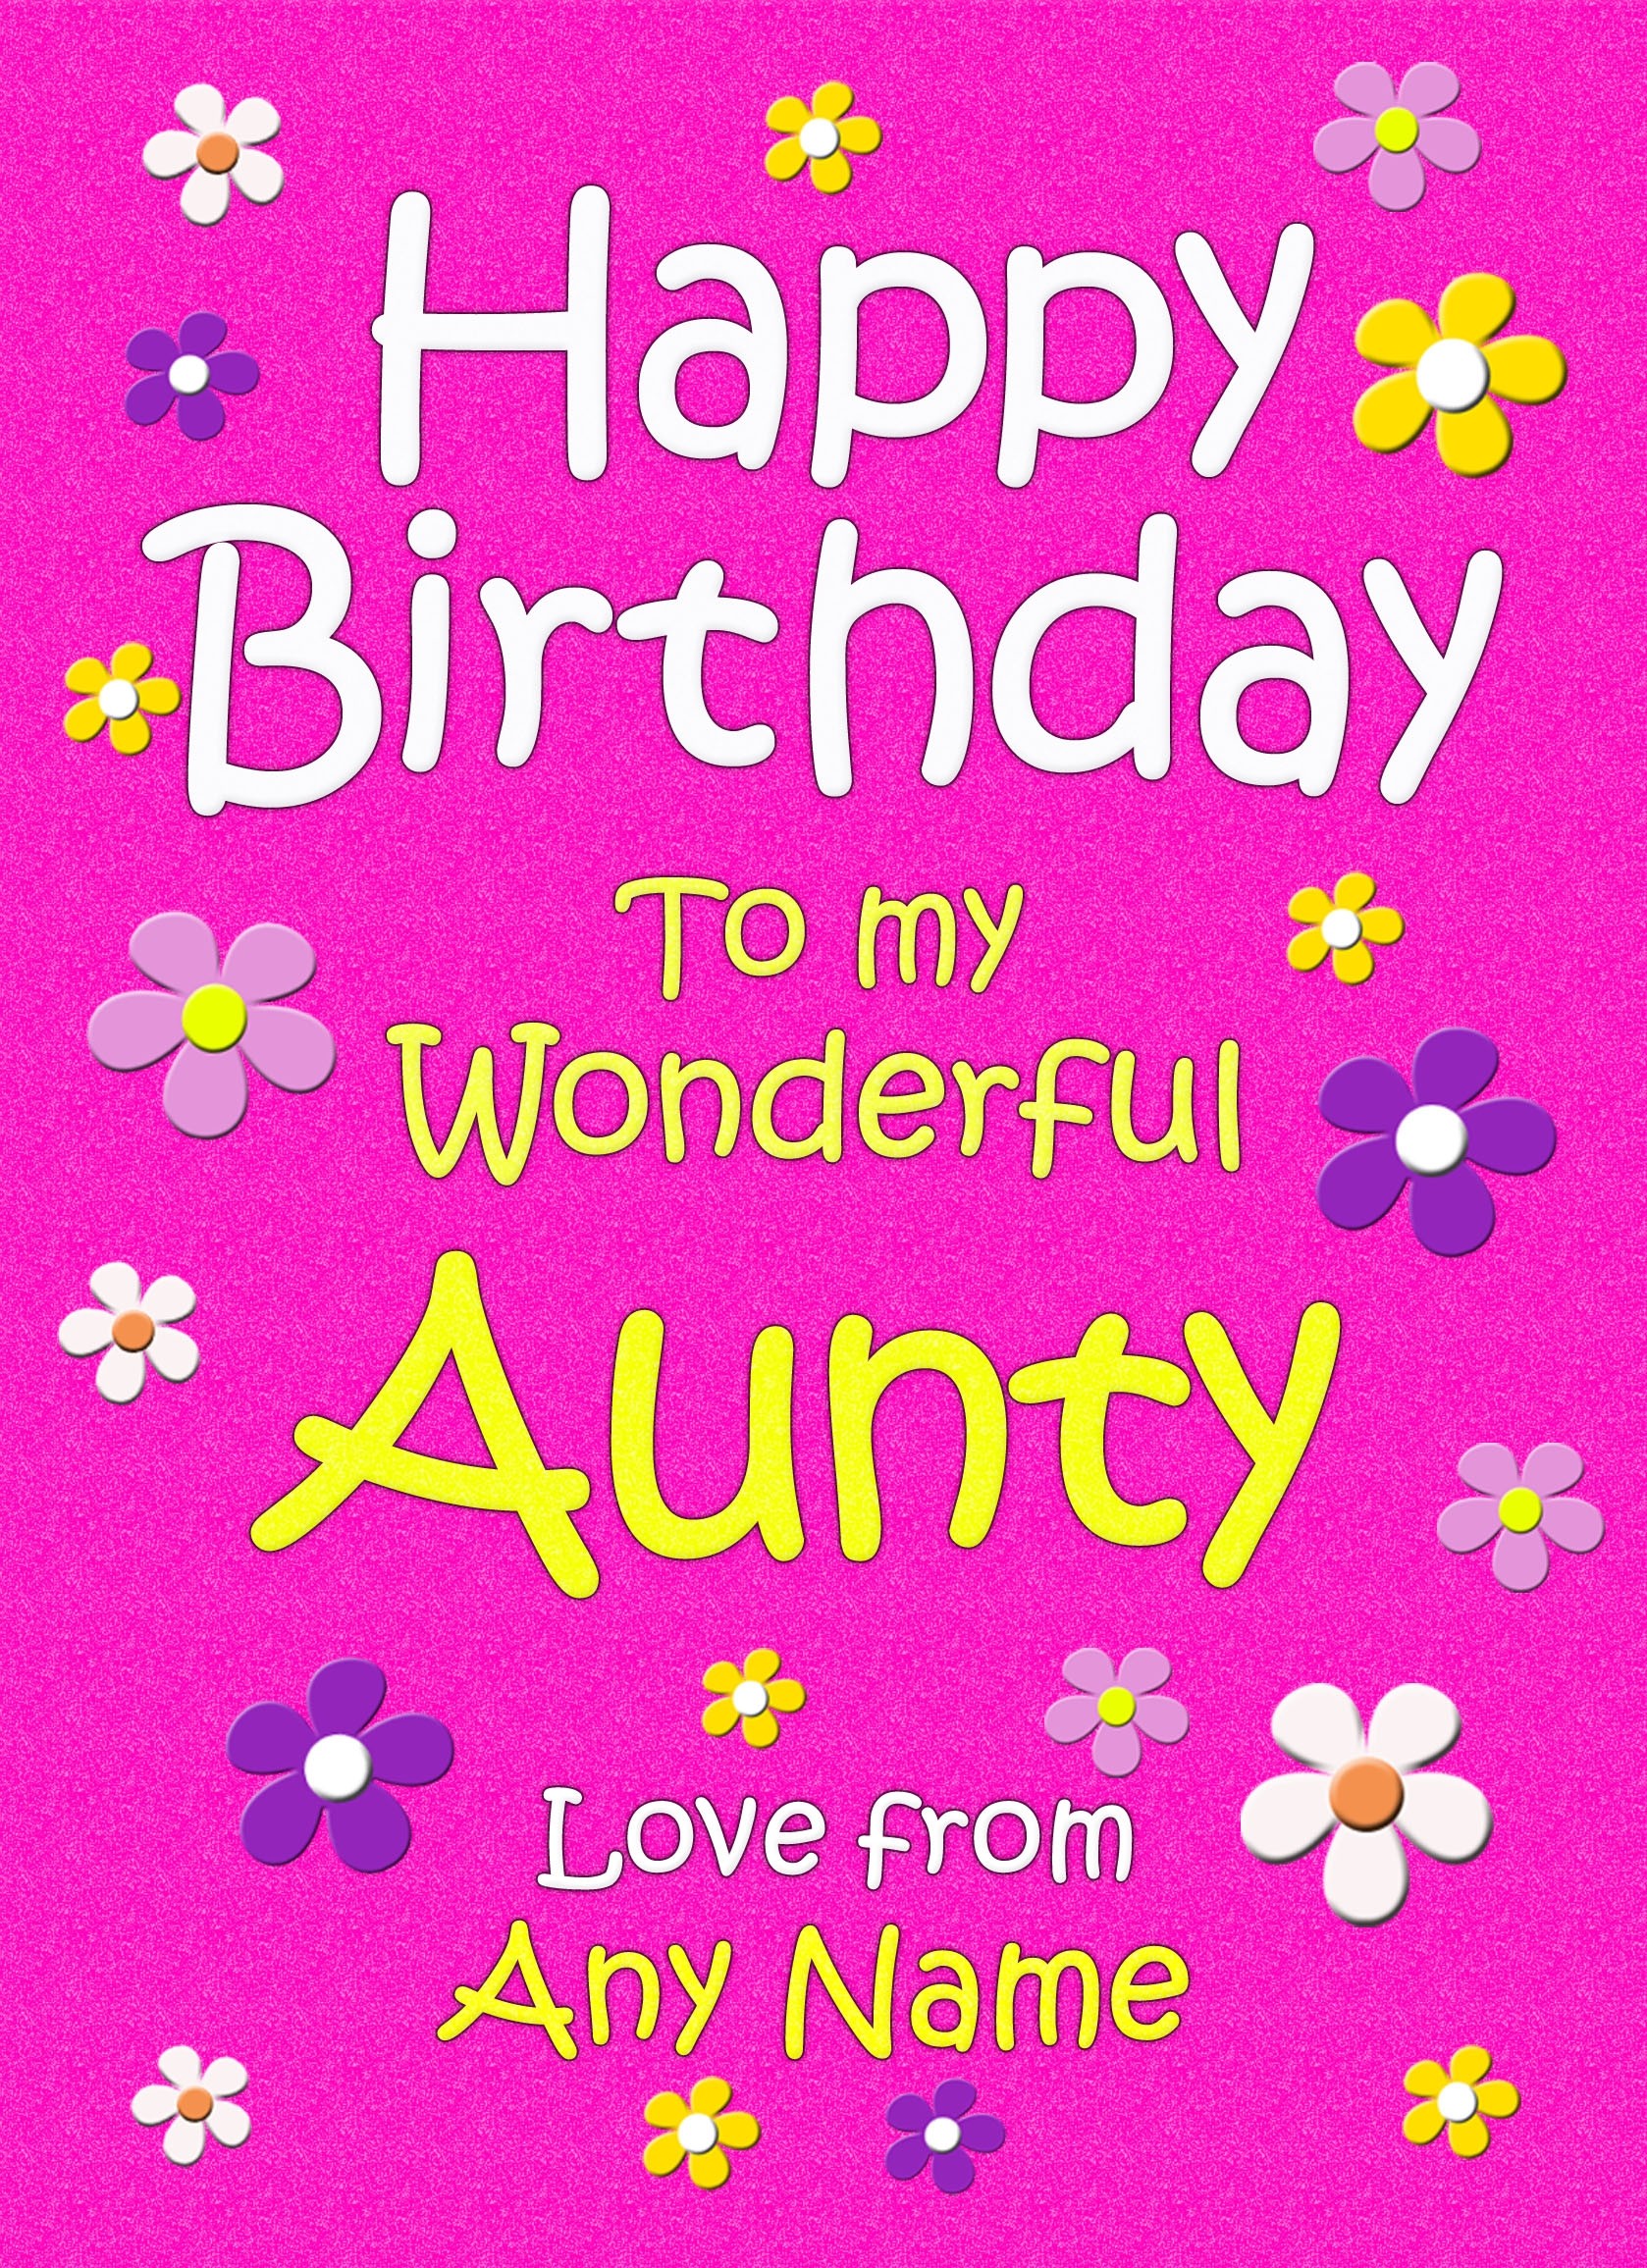 Personalised Aunty Birthday Card (Cerise)